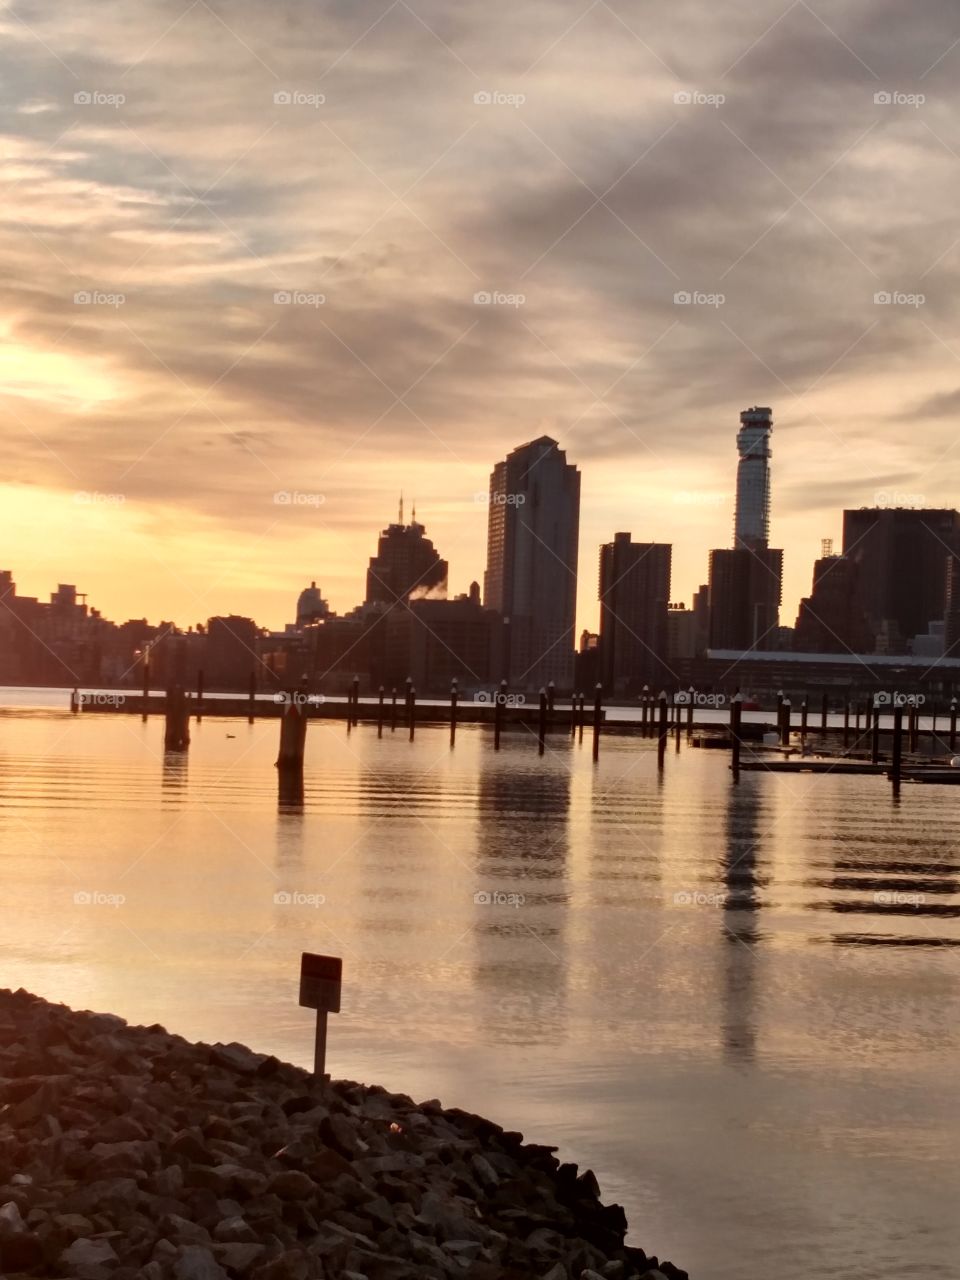 waterfront NY view